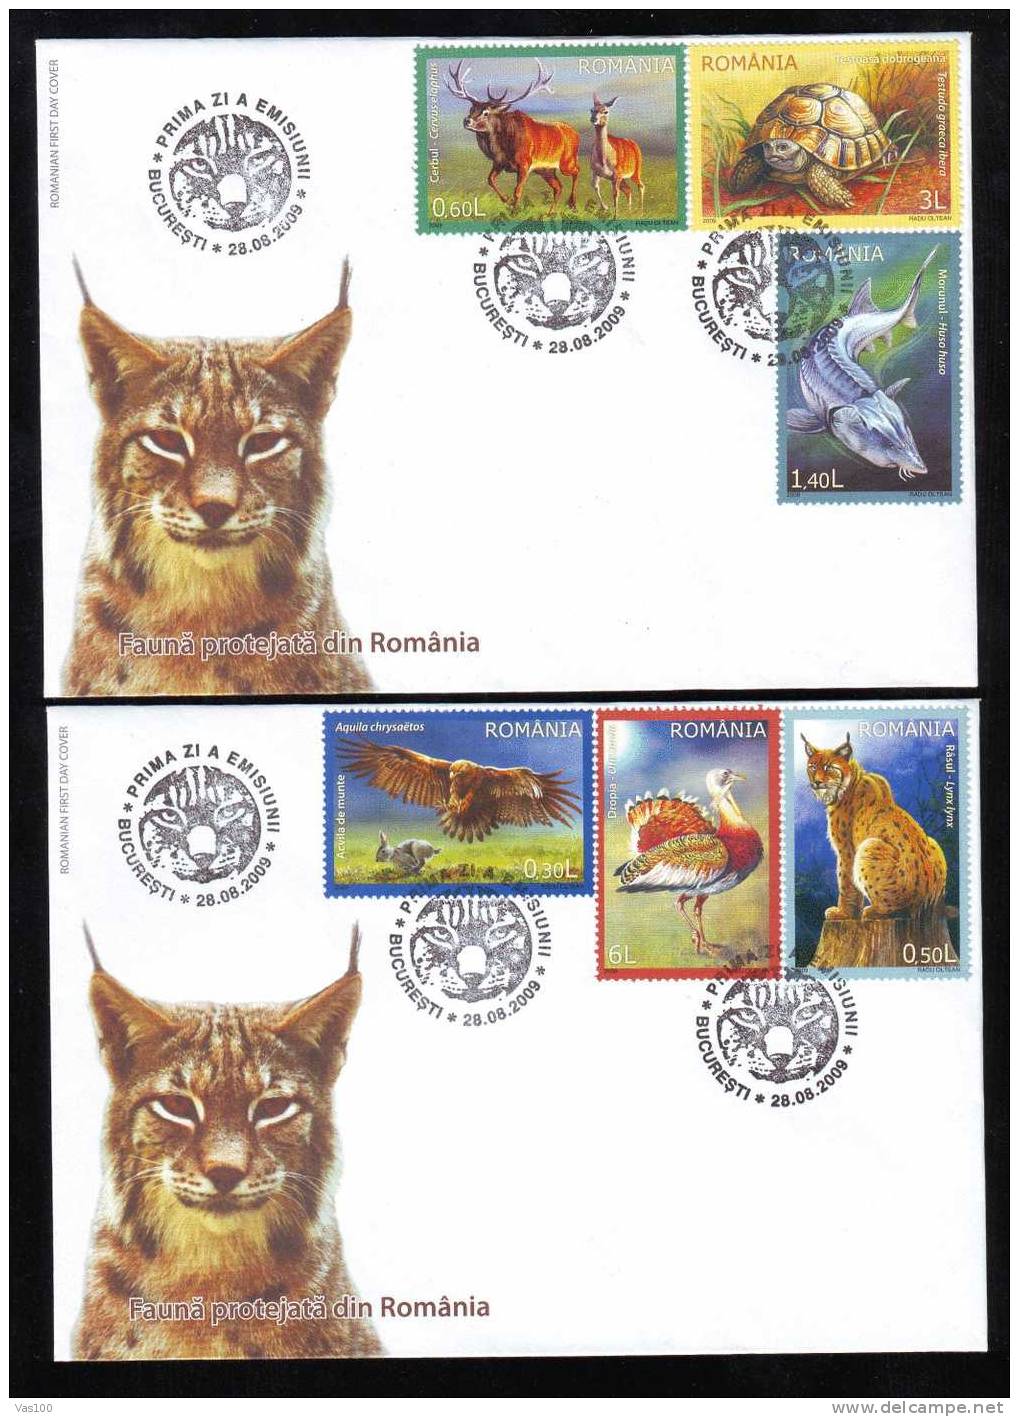 Animals Bird;Lynx,Cervus,Aquilla,Turtle,Fish,2009 2covers FDC Romania. - FDC